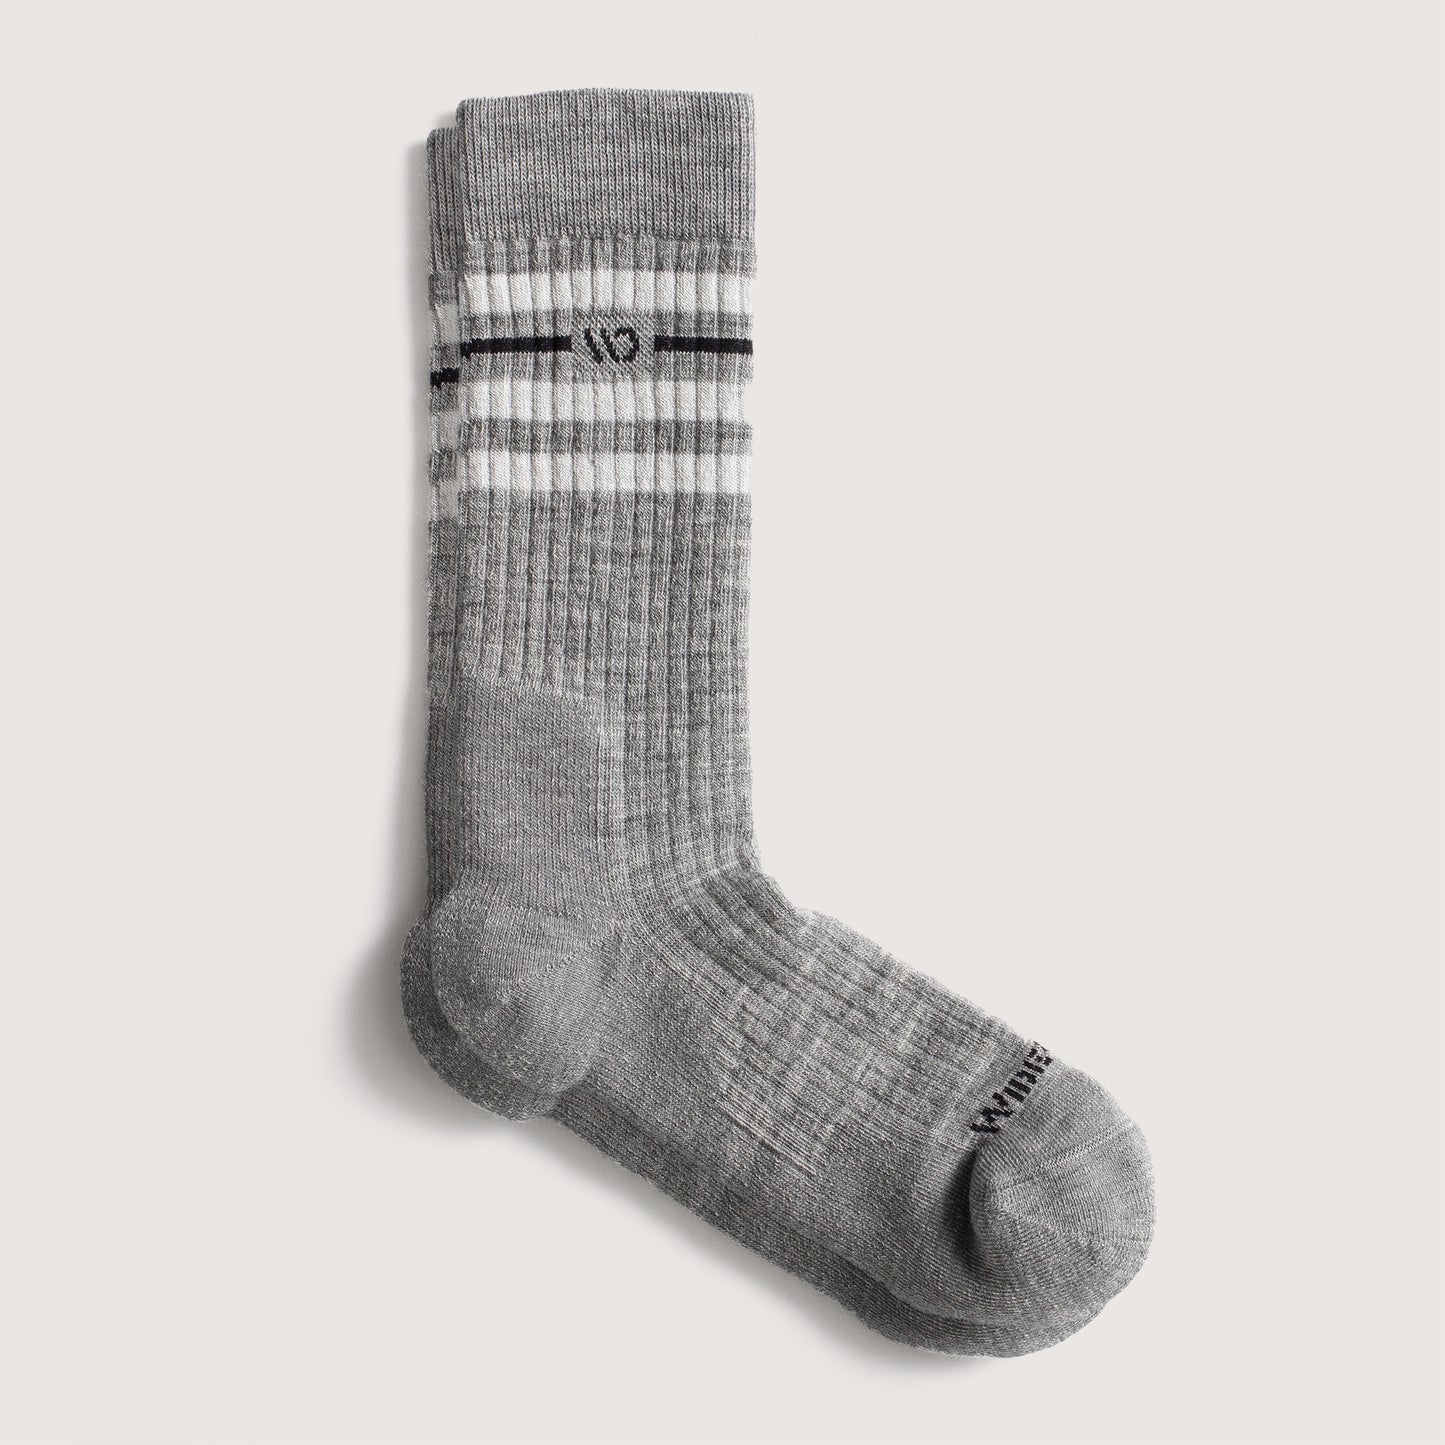 Flat socks featuring black logo, light gray body, white stripes below the cuff--Light Gray